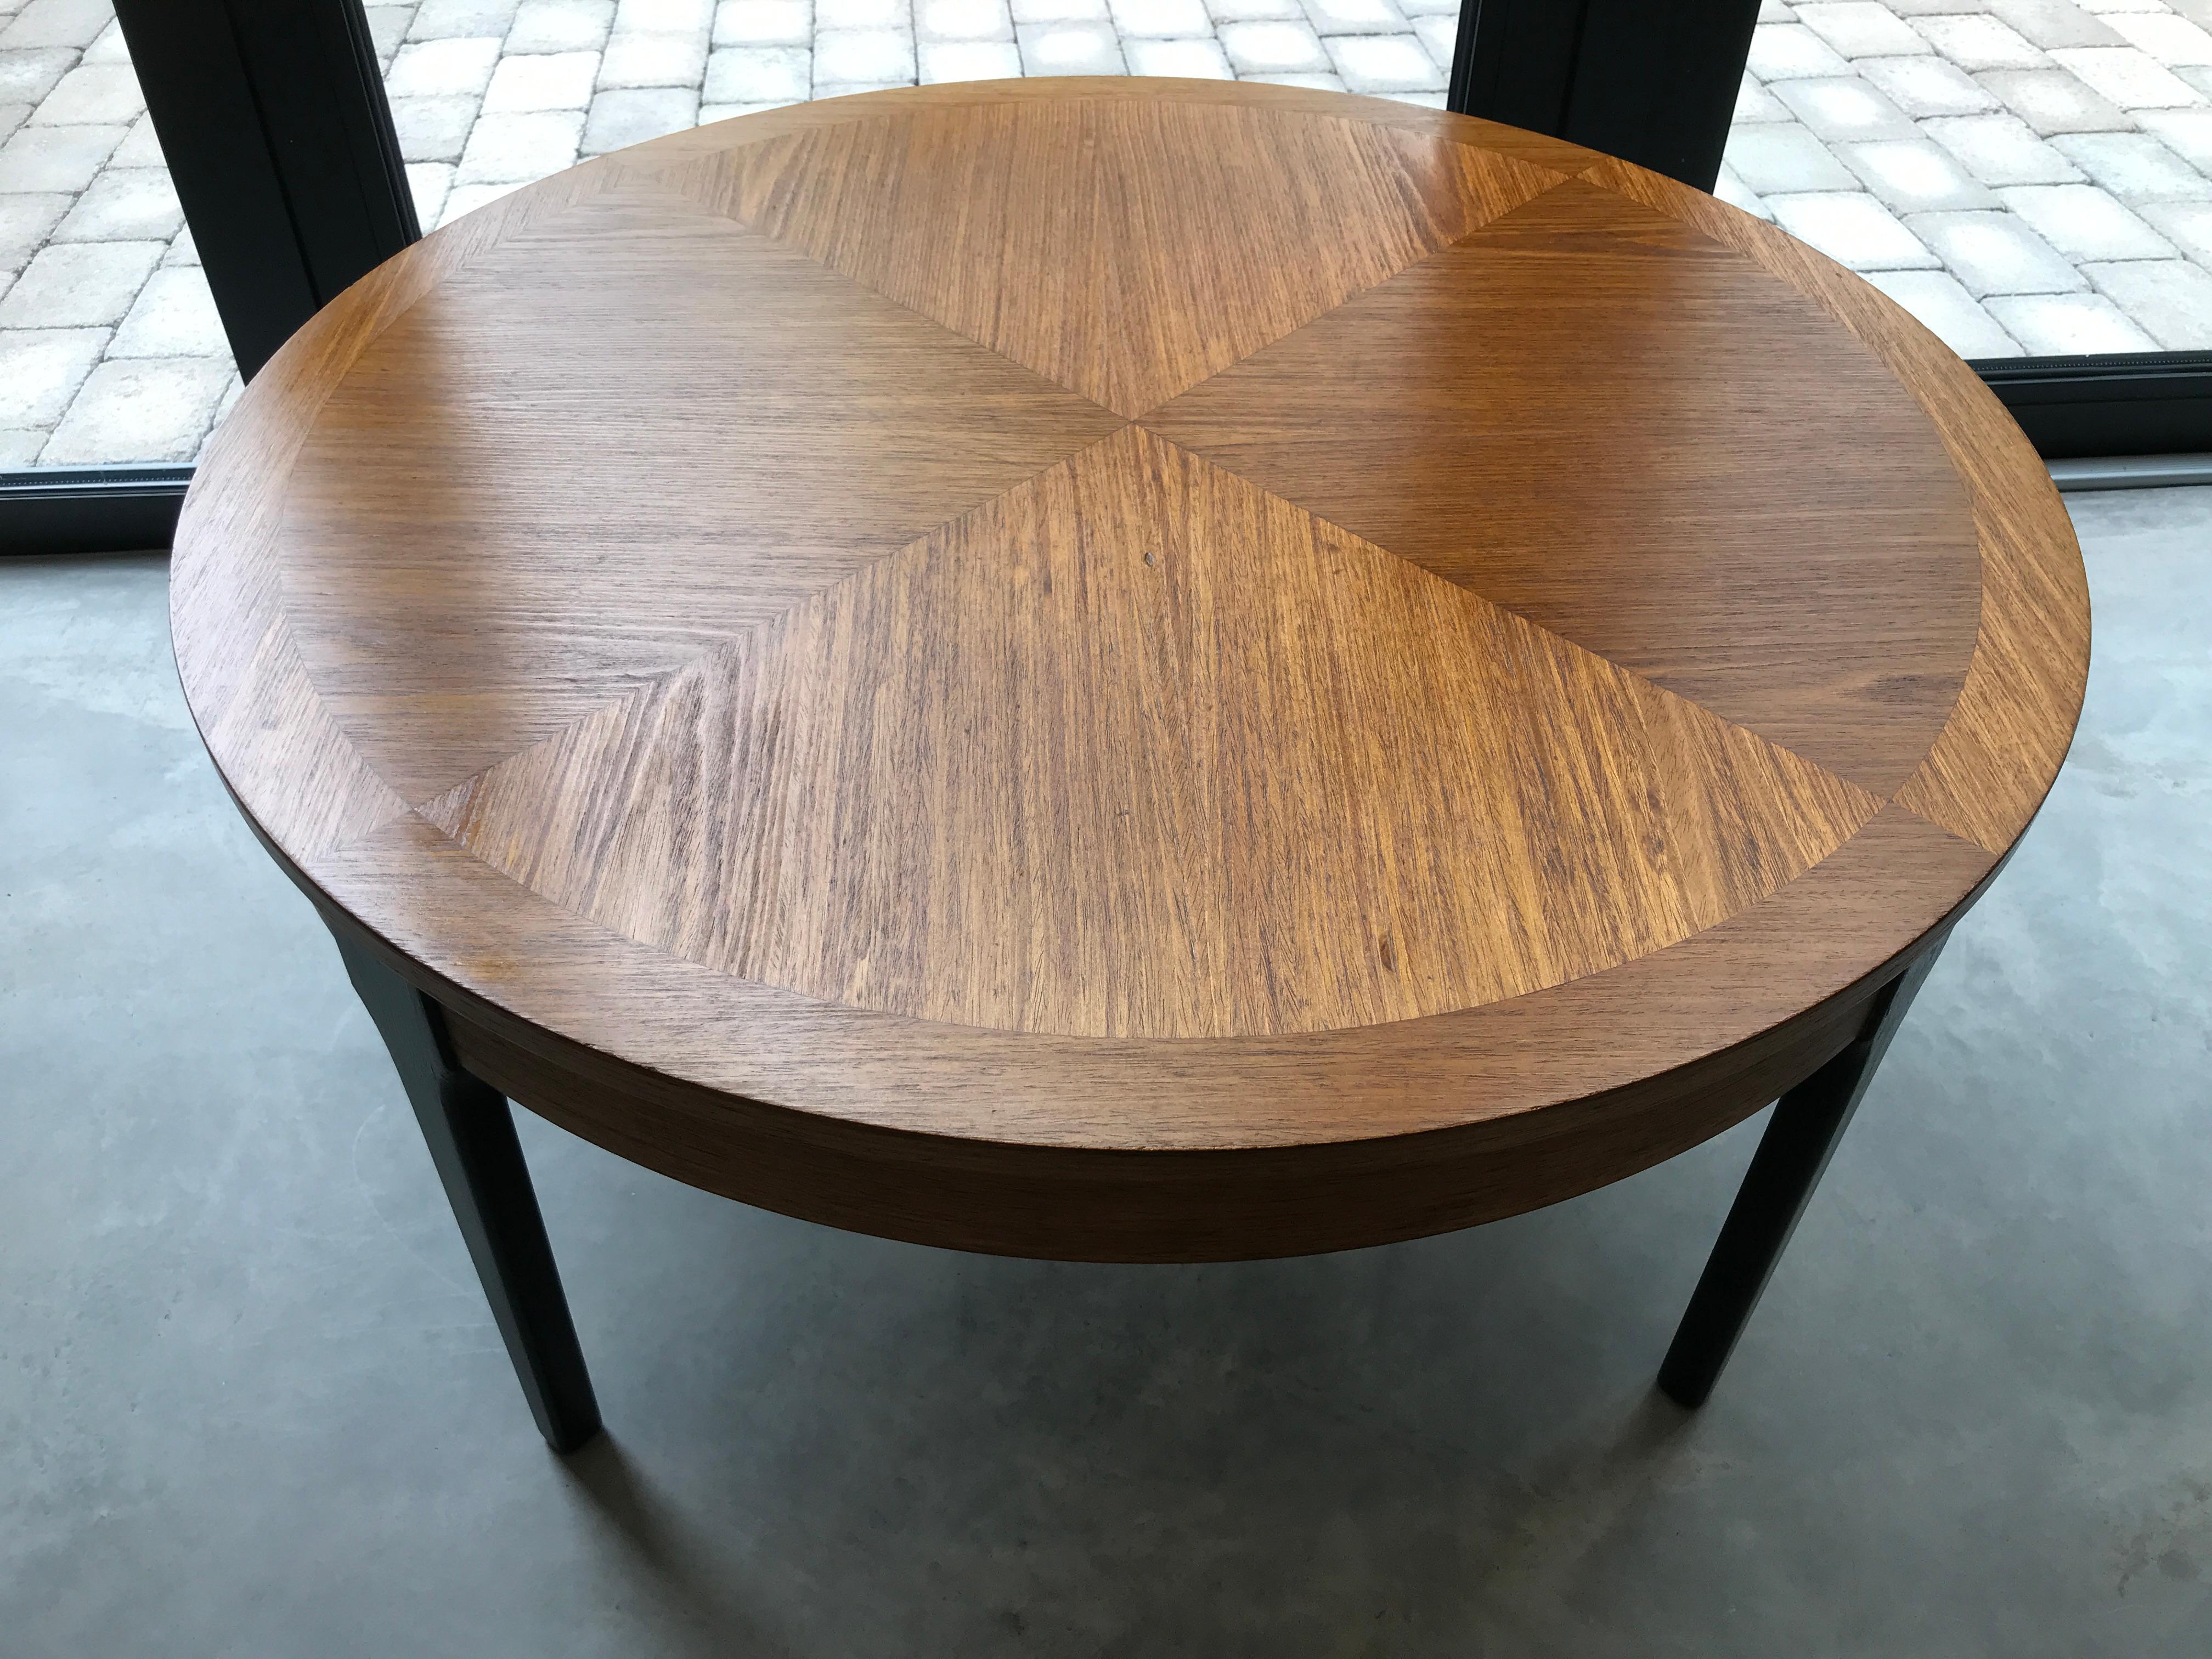 Exquisite Danish 1960s Retro Teak Coffee Table with Black Legs For Sale 1